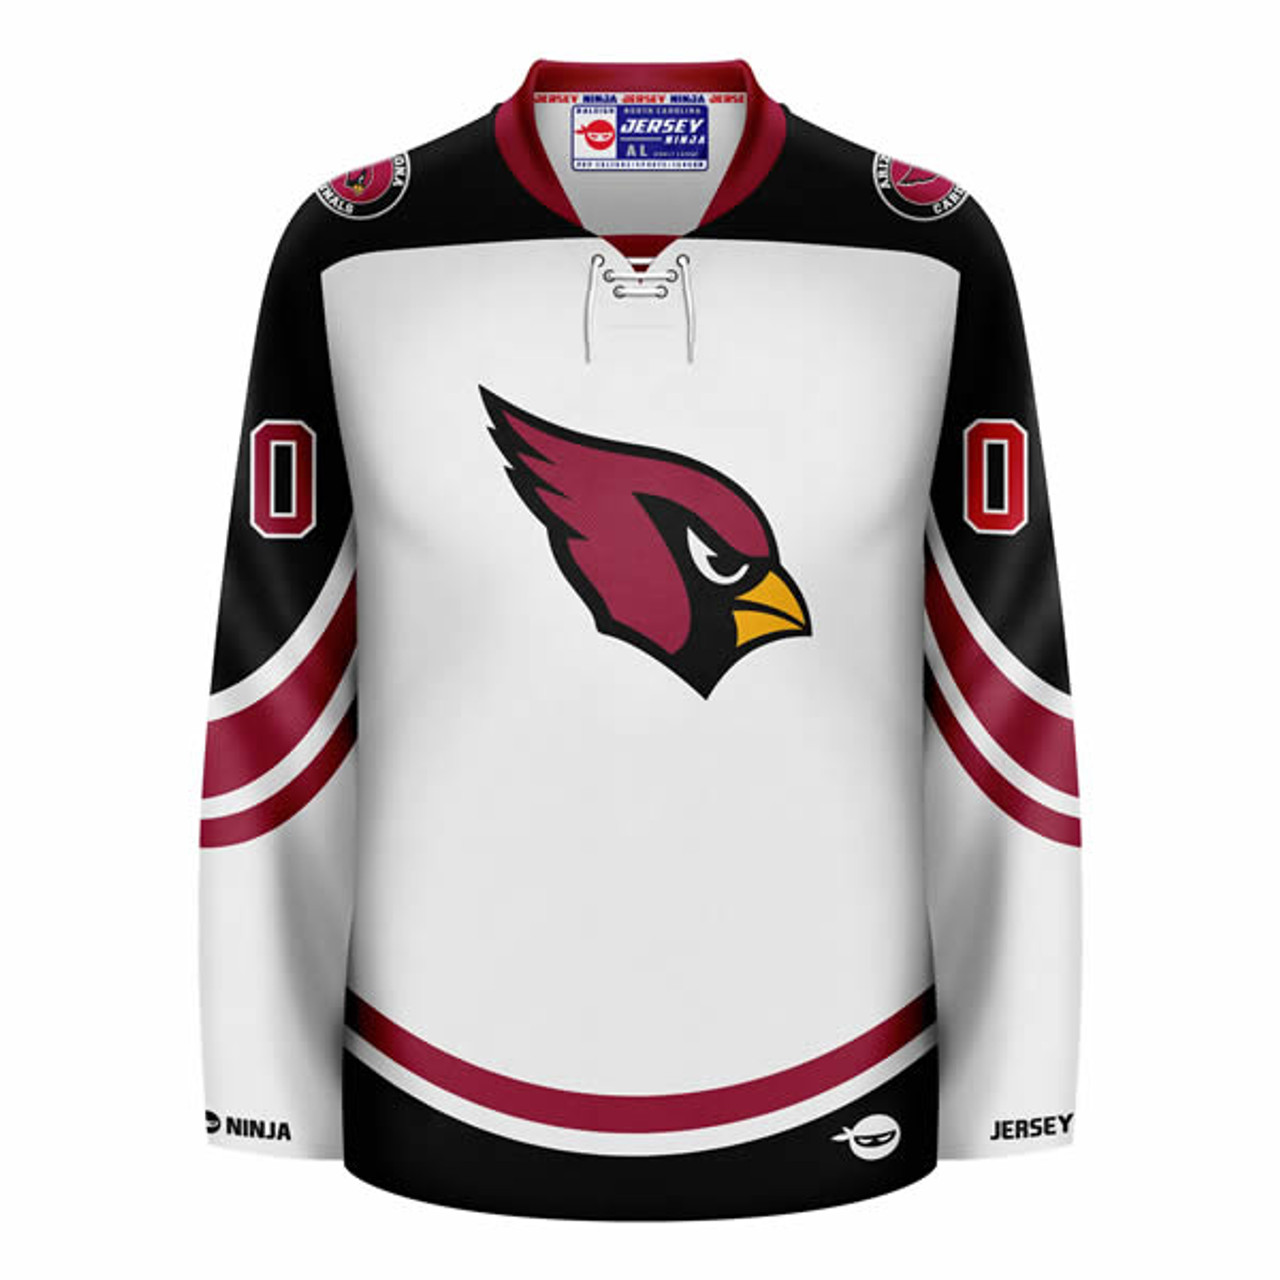 Jersey Ninja - Arizona Cardinals White Hockey Jersey